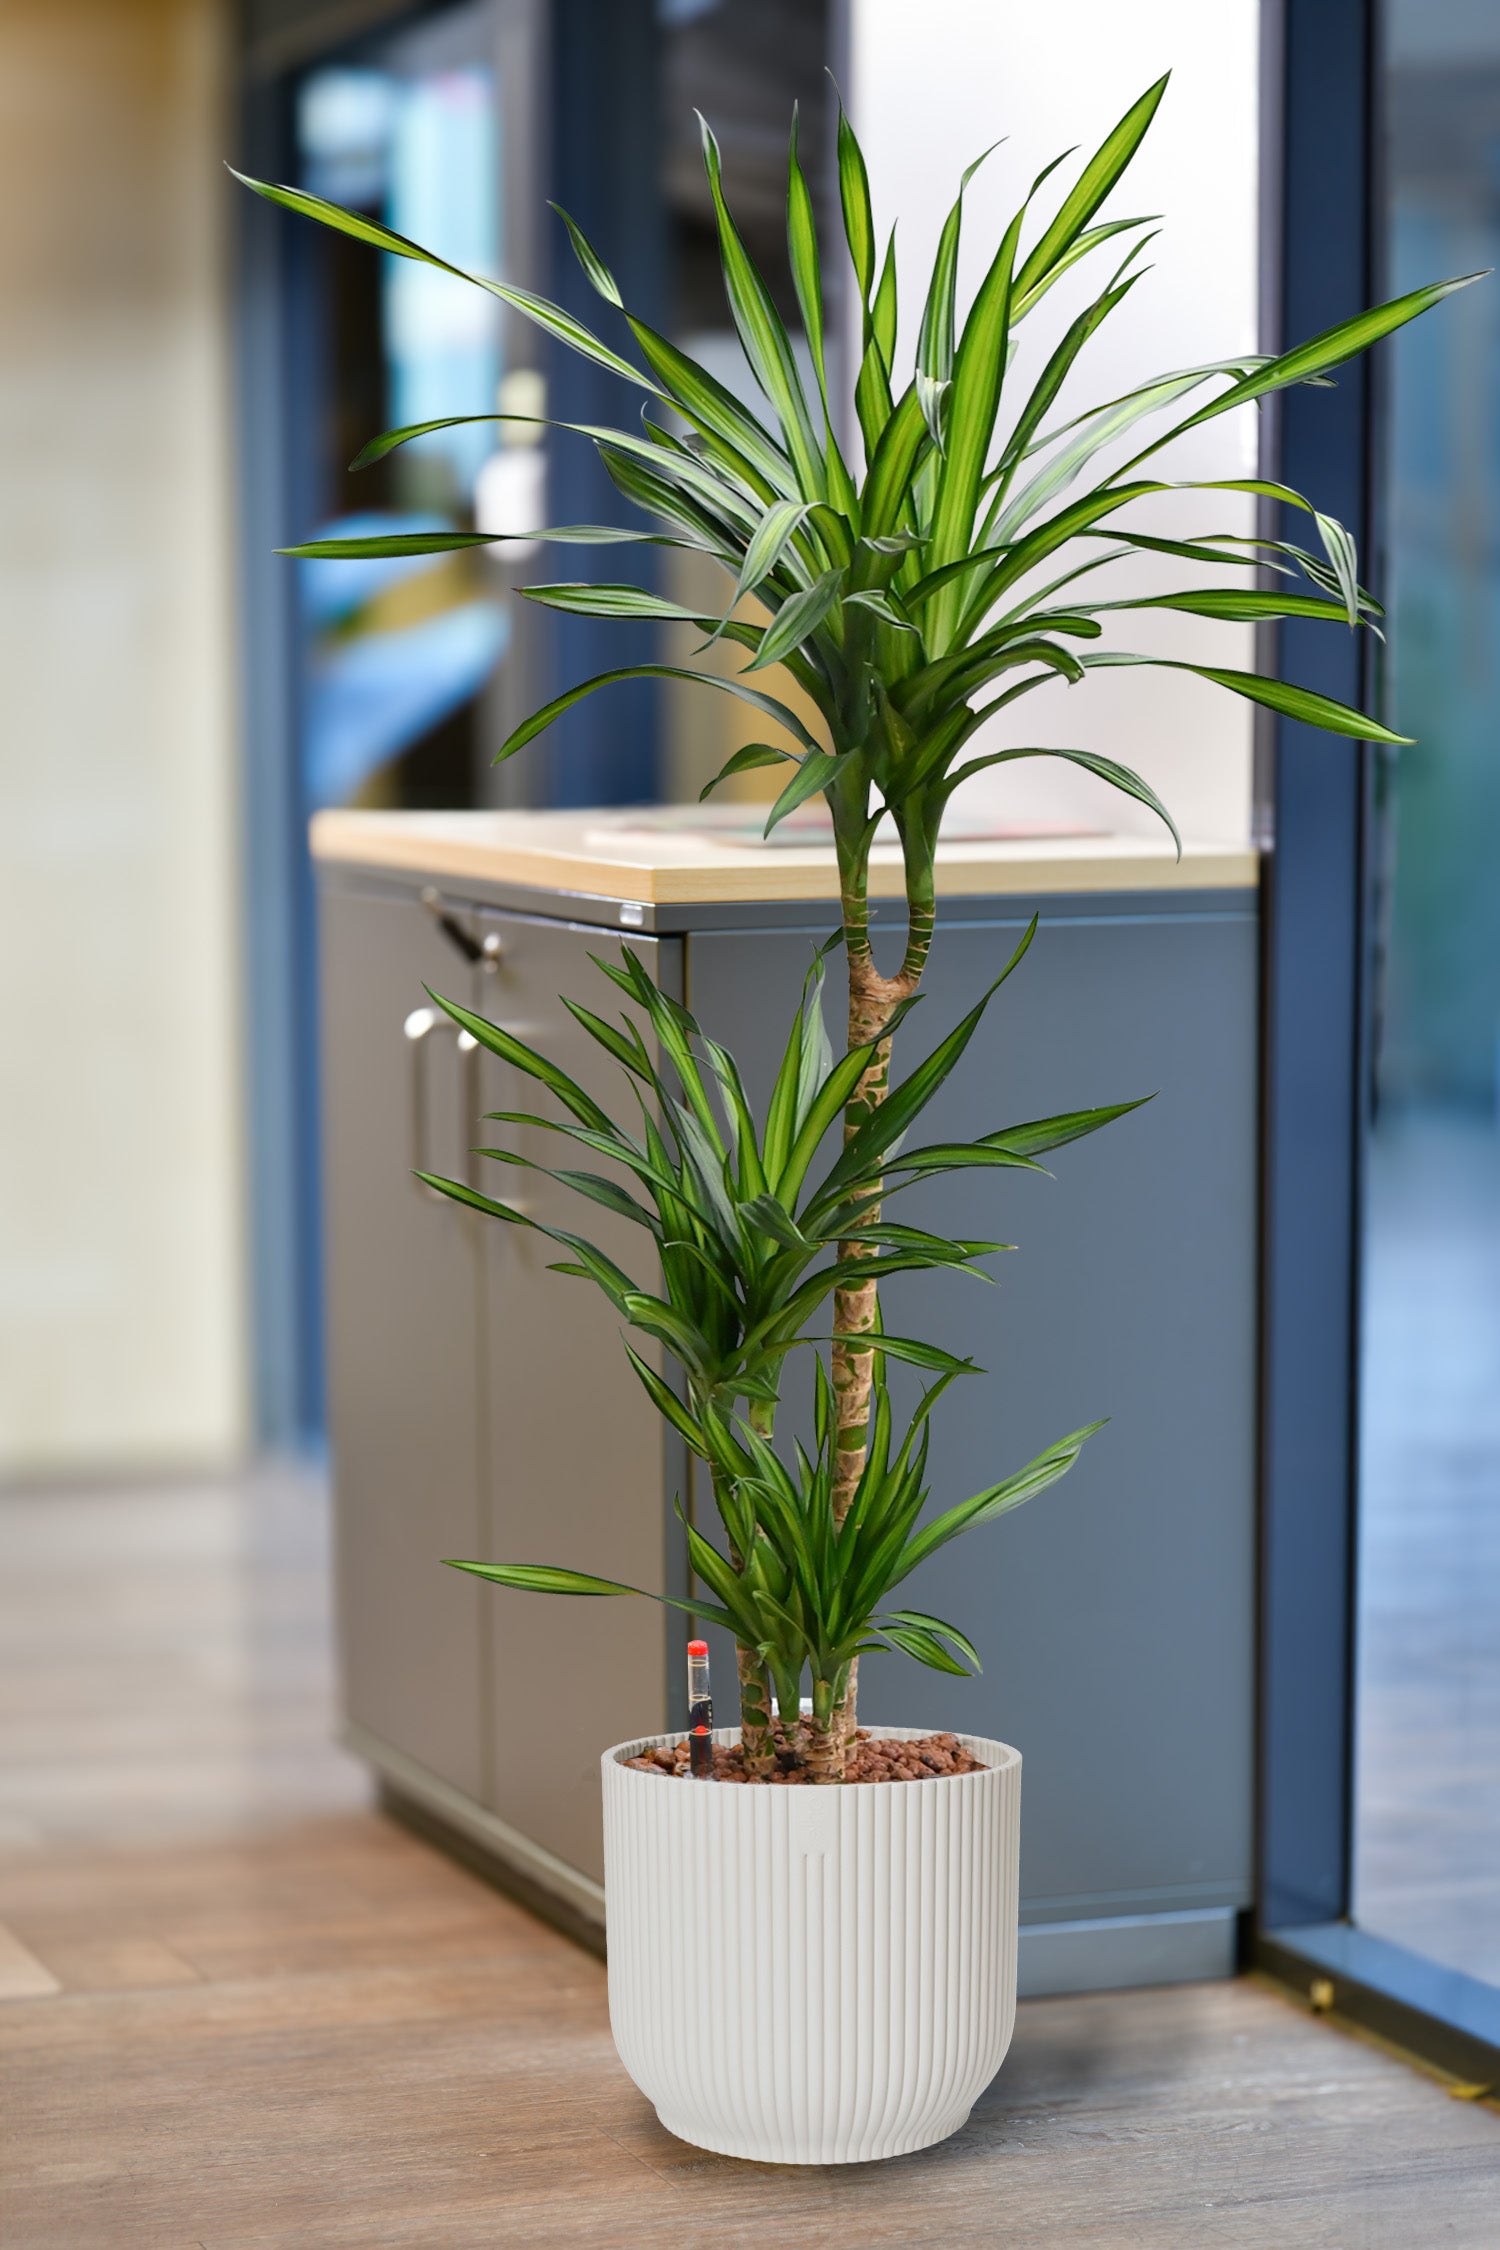 Rikki Drachenbaum, Hydropflanze 110-120cm